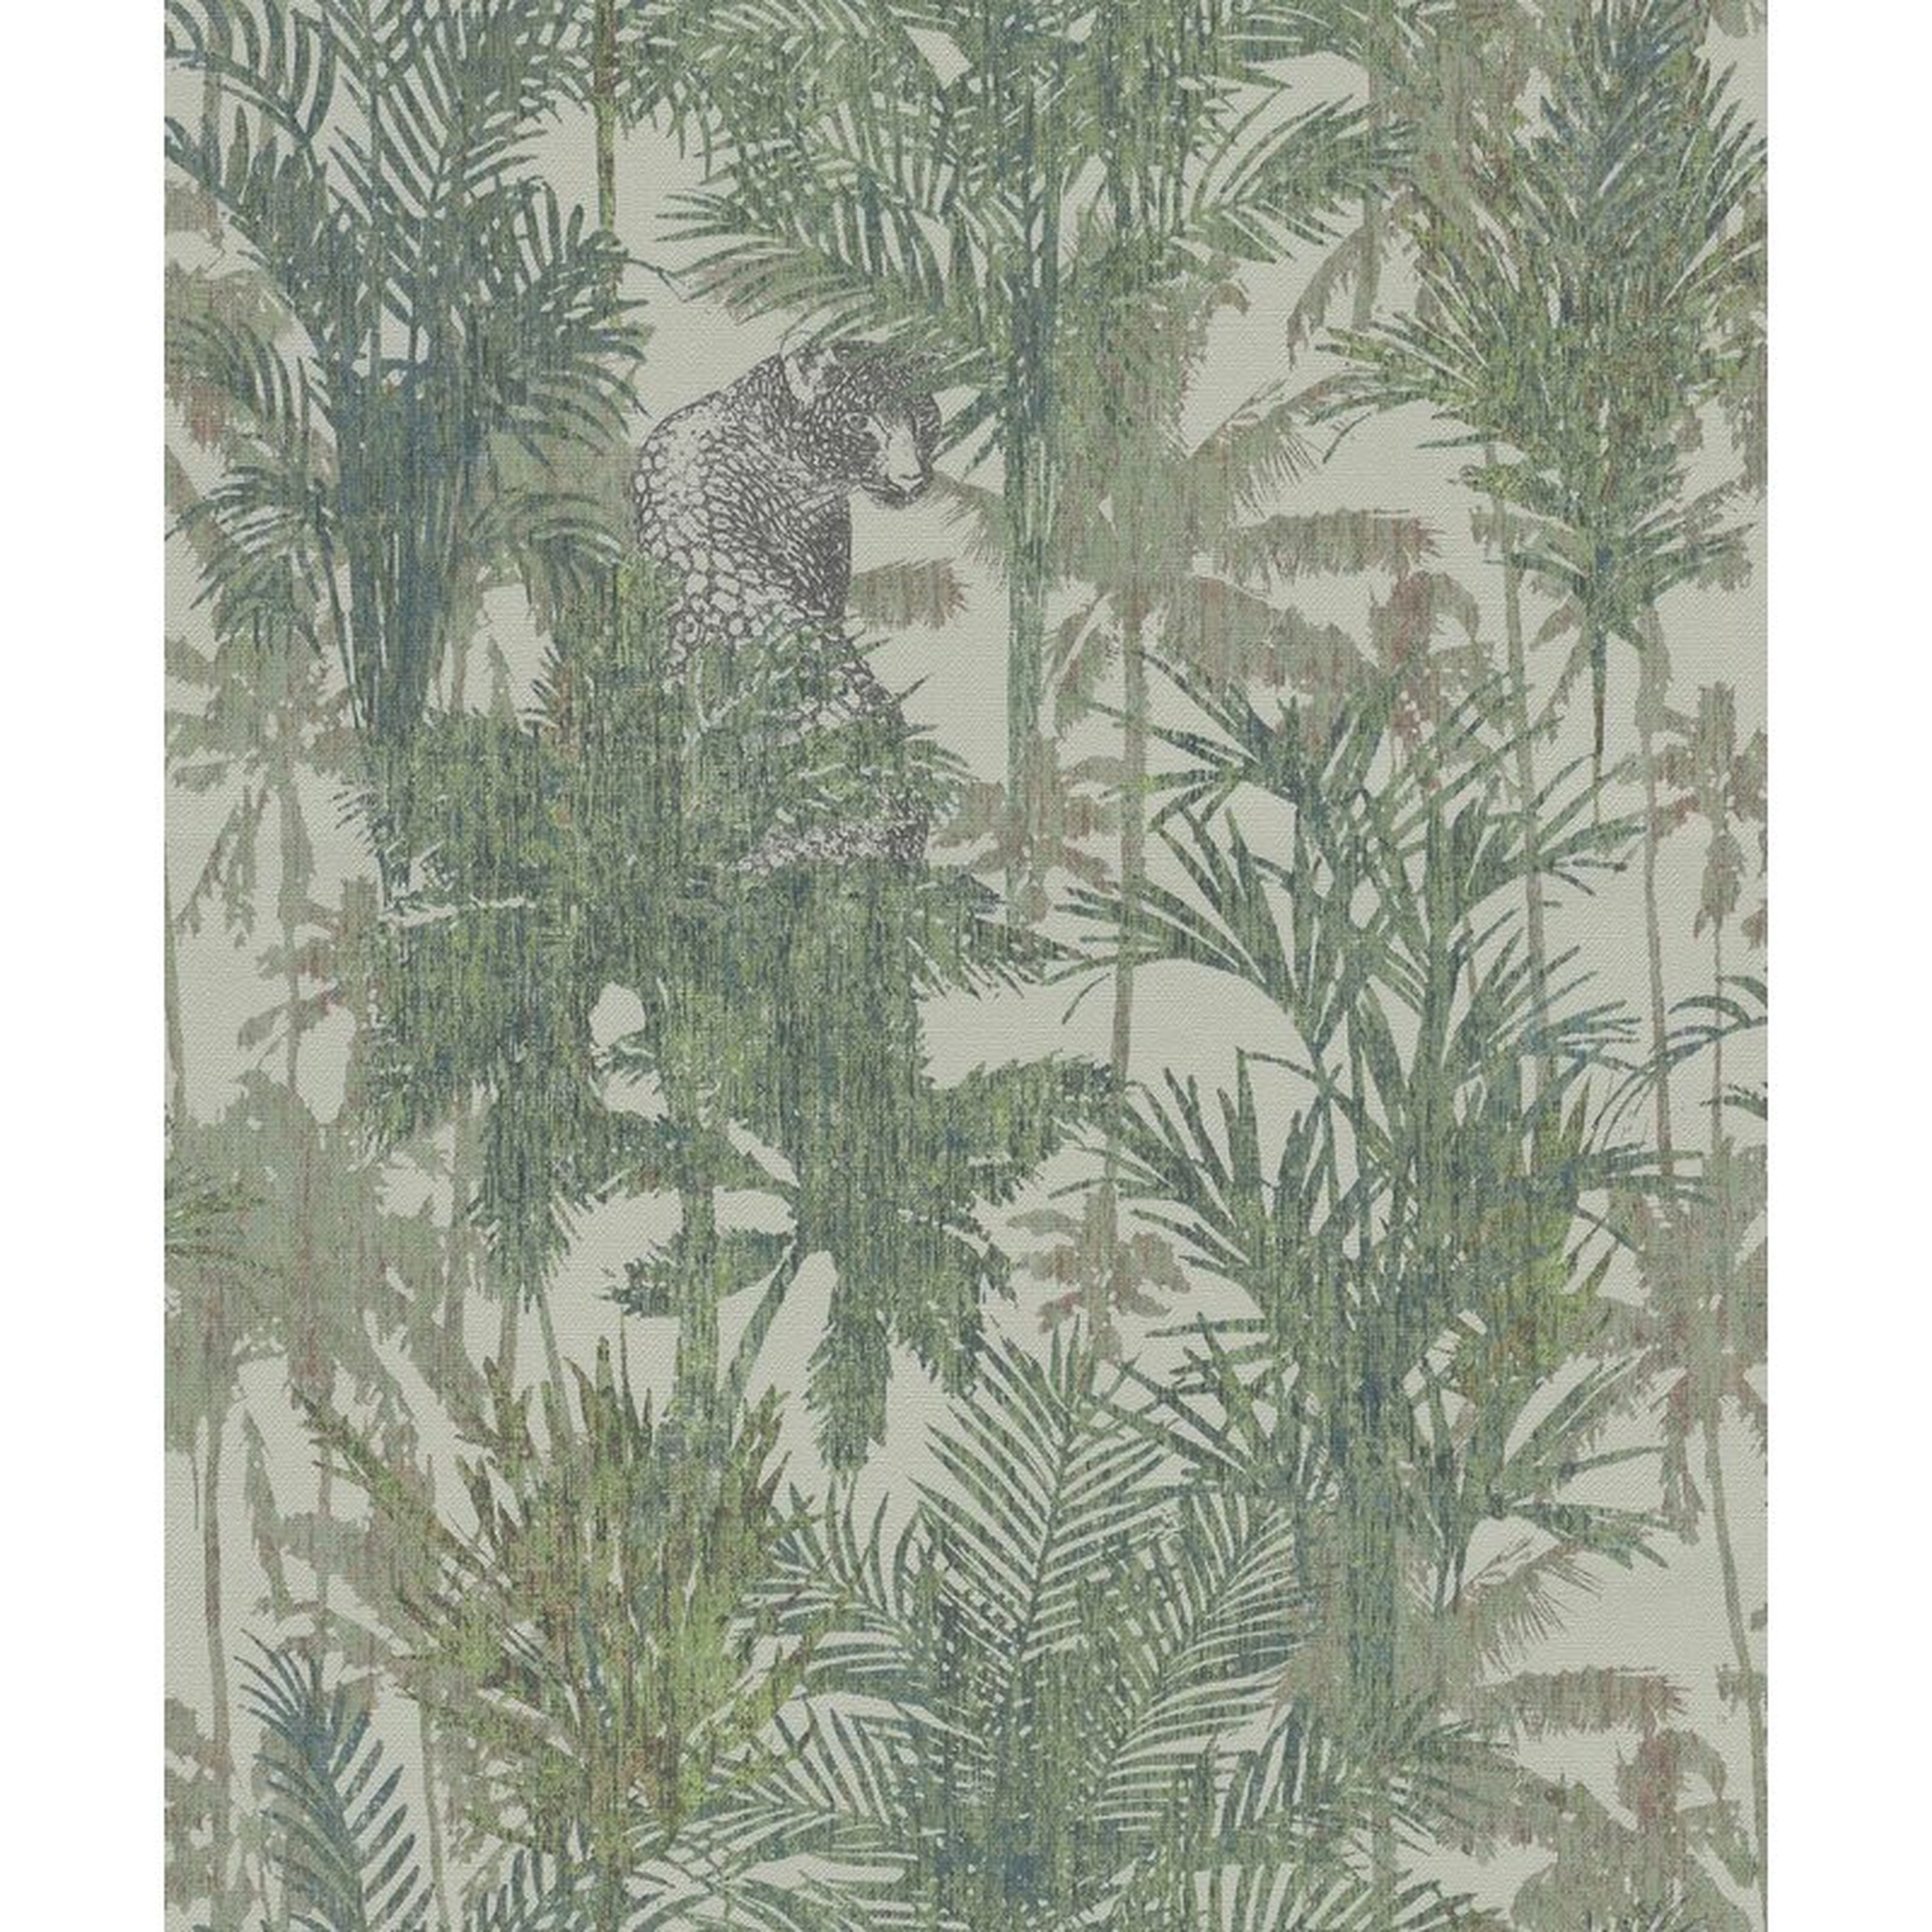 Jack Hidden in Jungle 33' L x 21" W Textured Wallpaper Roll - Wayfair